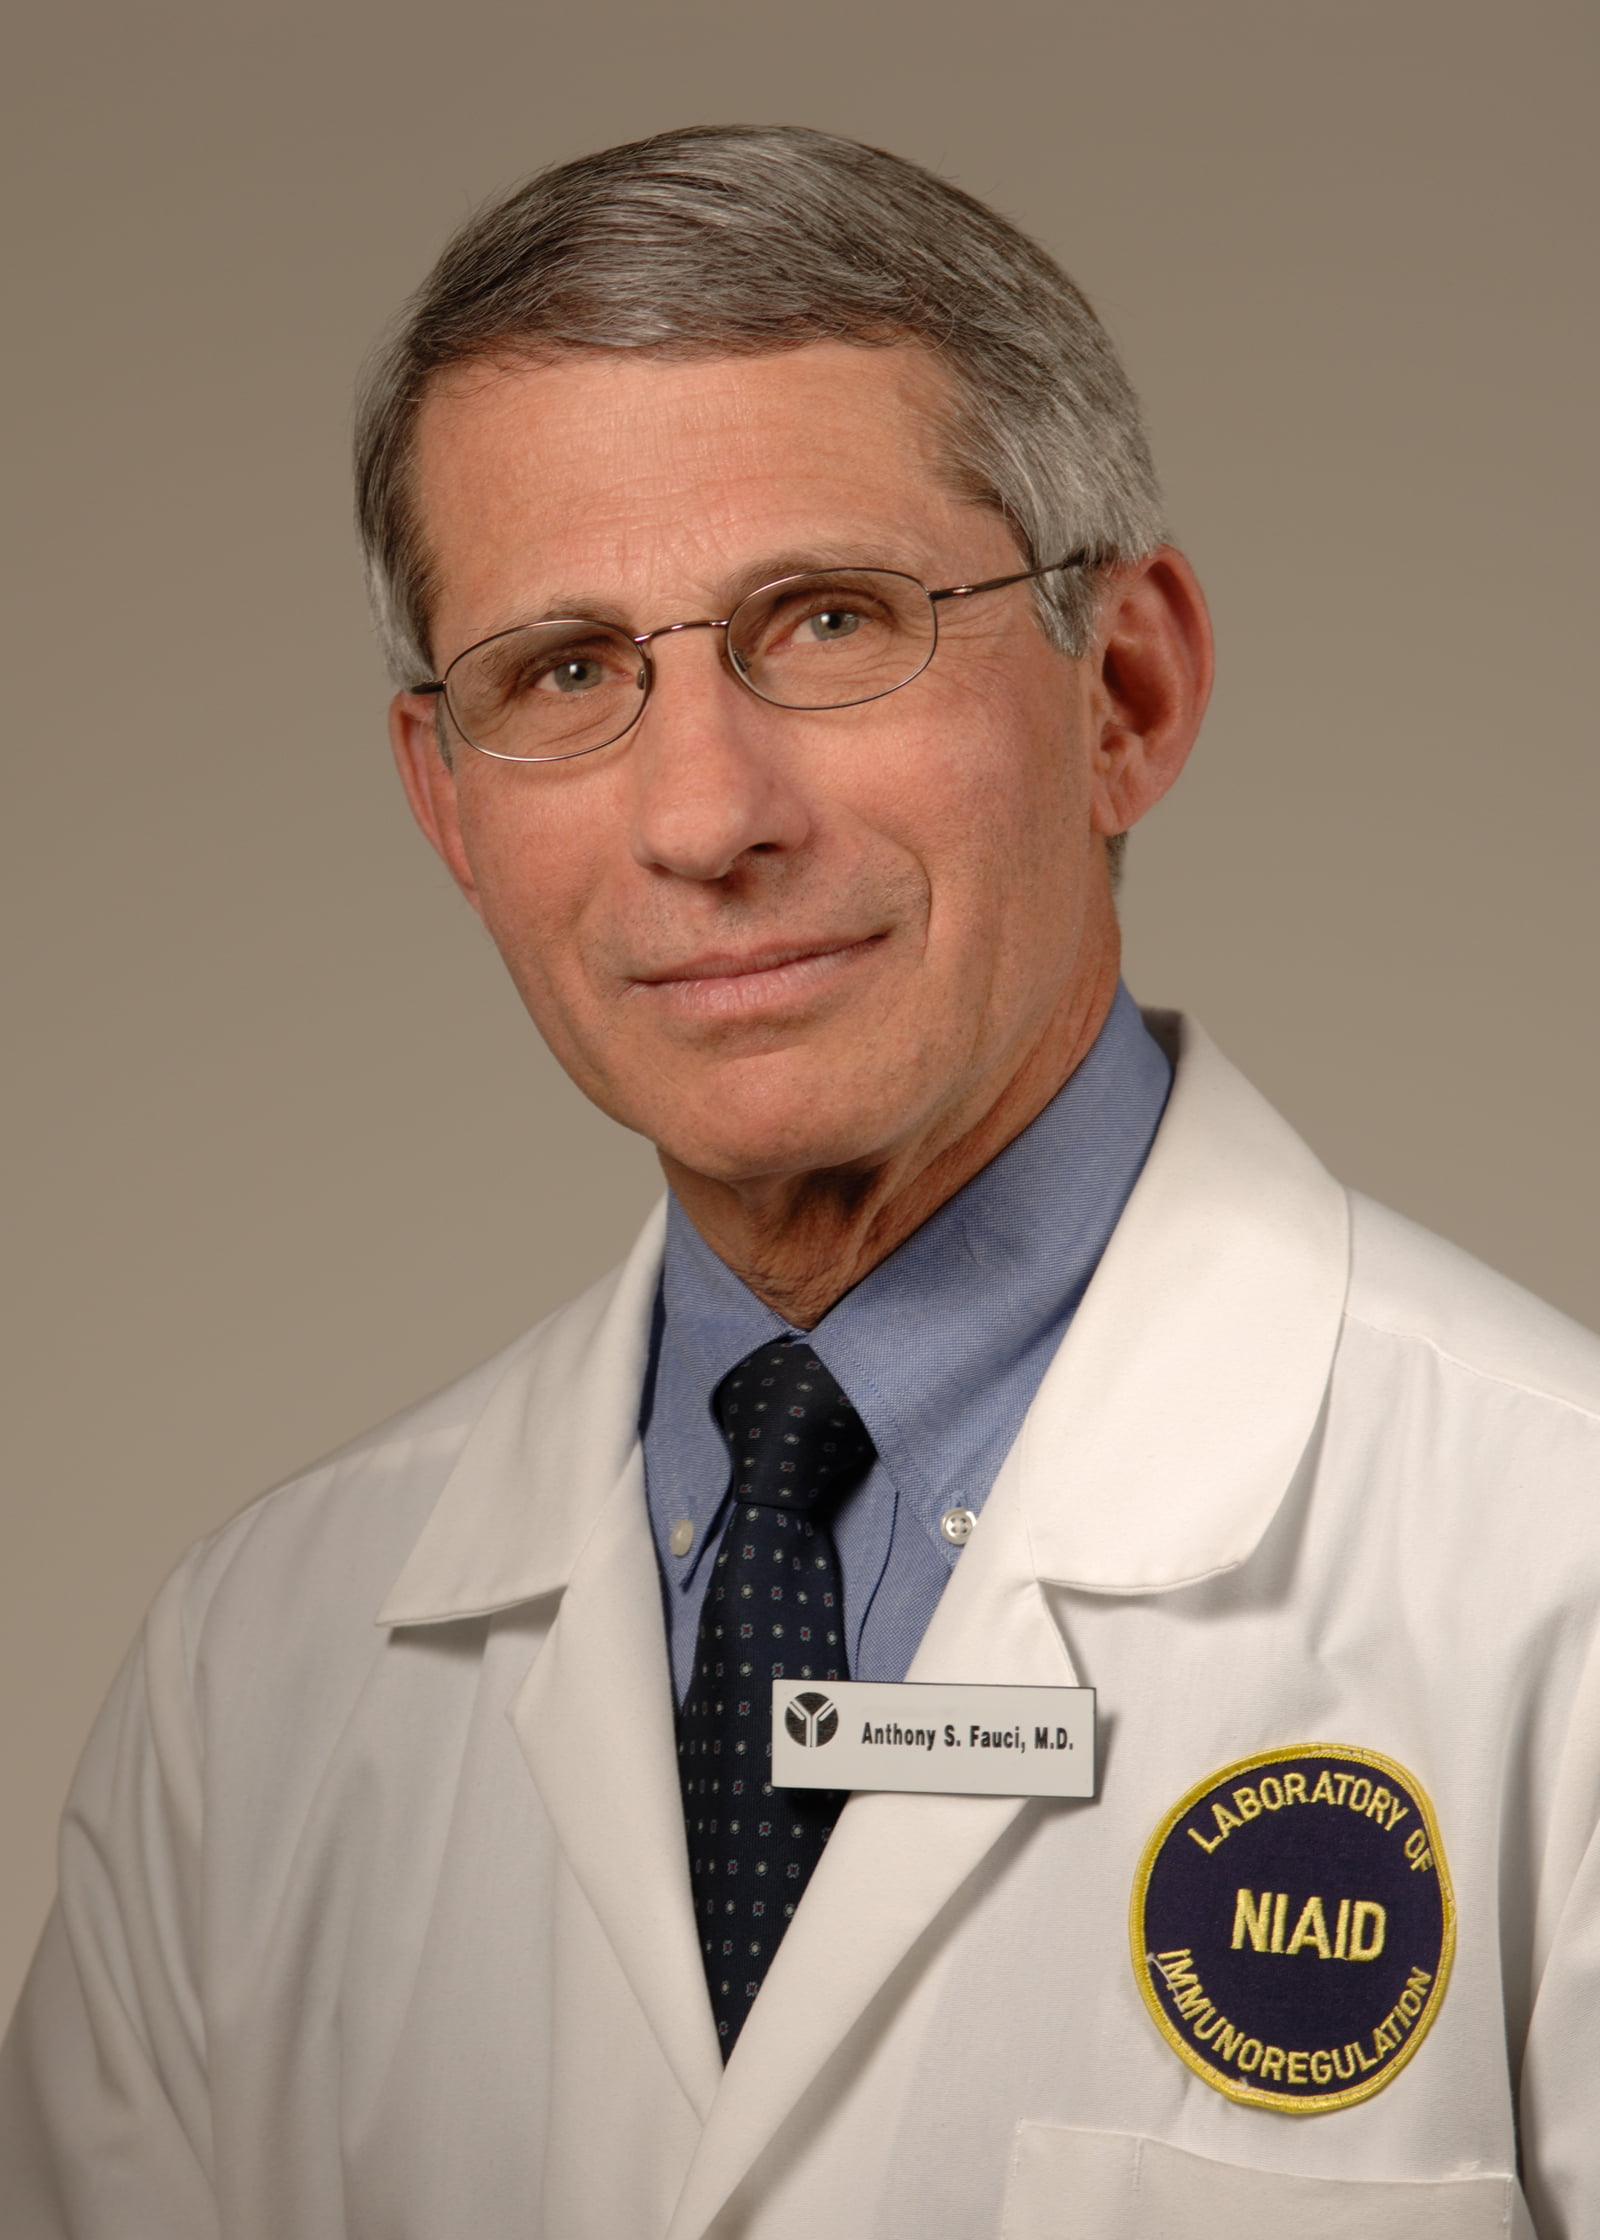 Dr. Anthony Fauci’s Predictions For Coronavirus